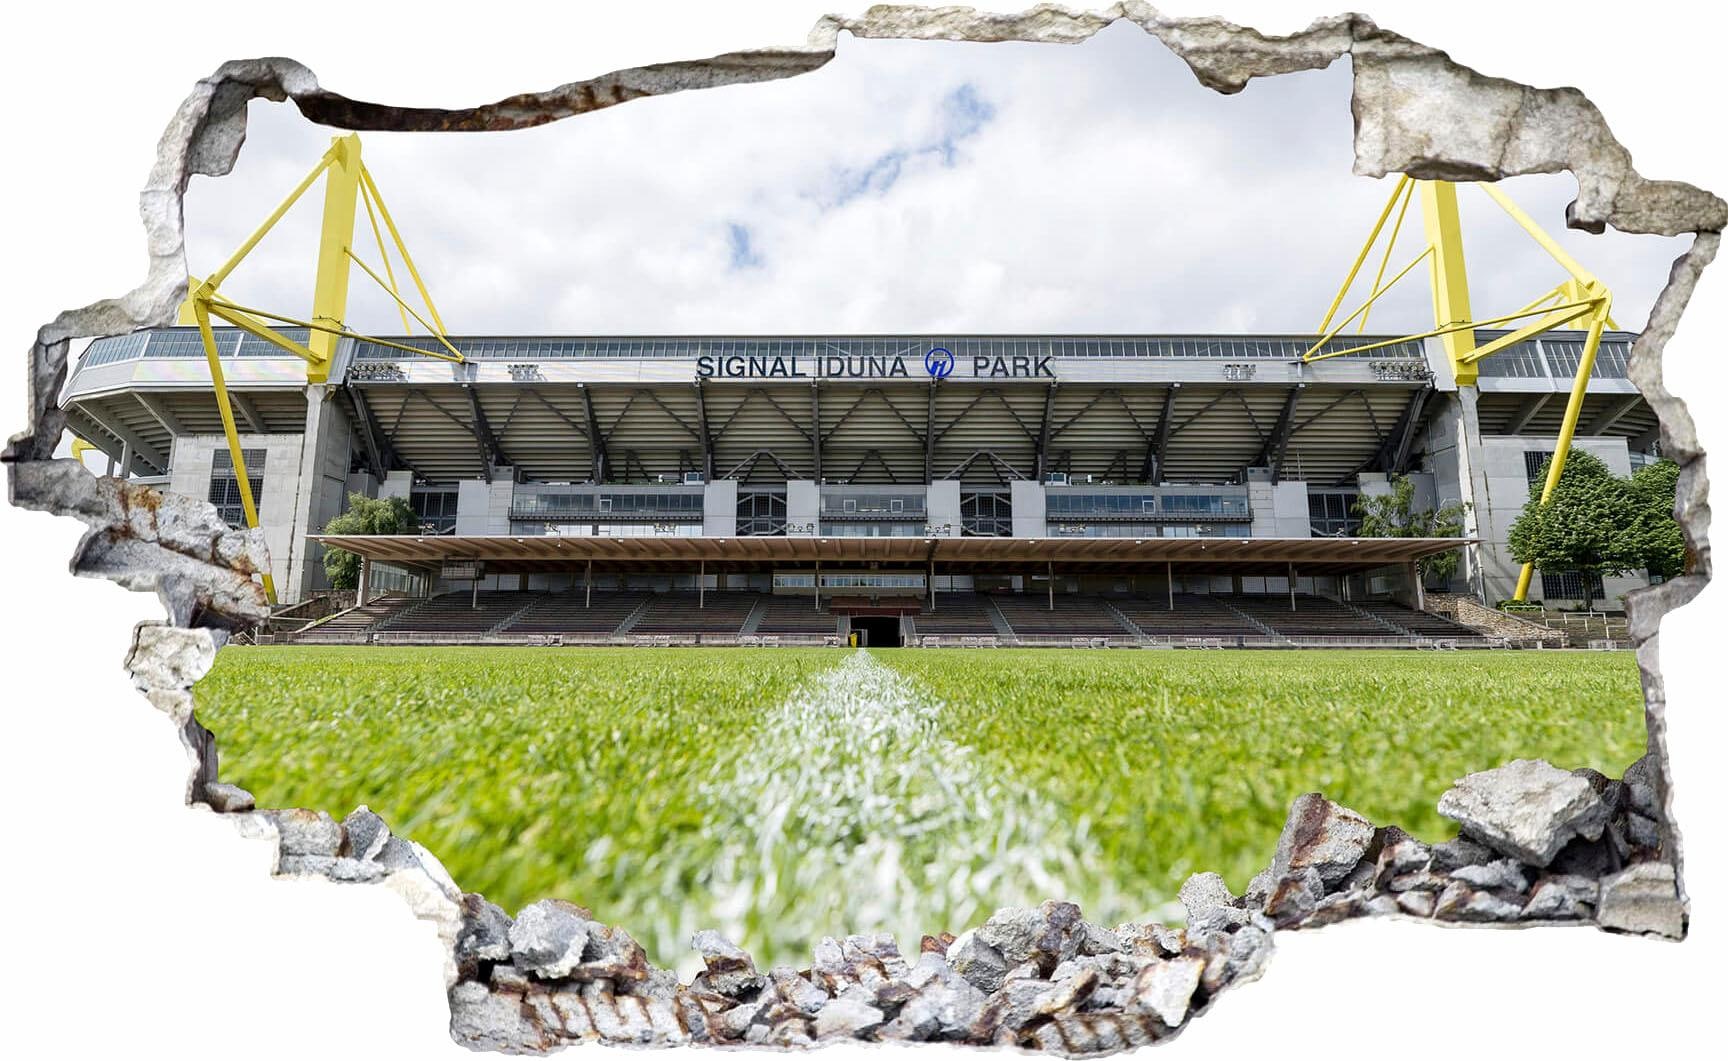 Wandtattoo »Borussia Dortmund BVB Signal Iduna«, selbstklebend, entfernbar